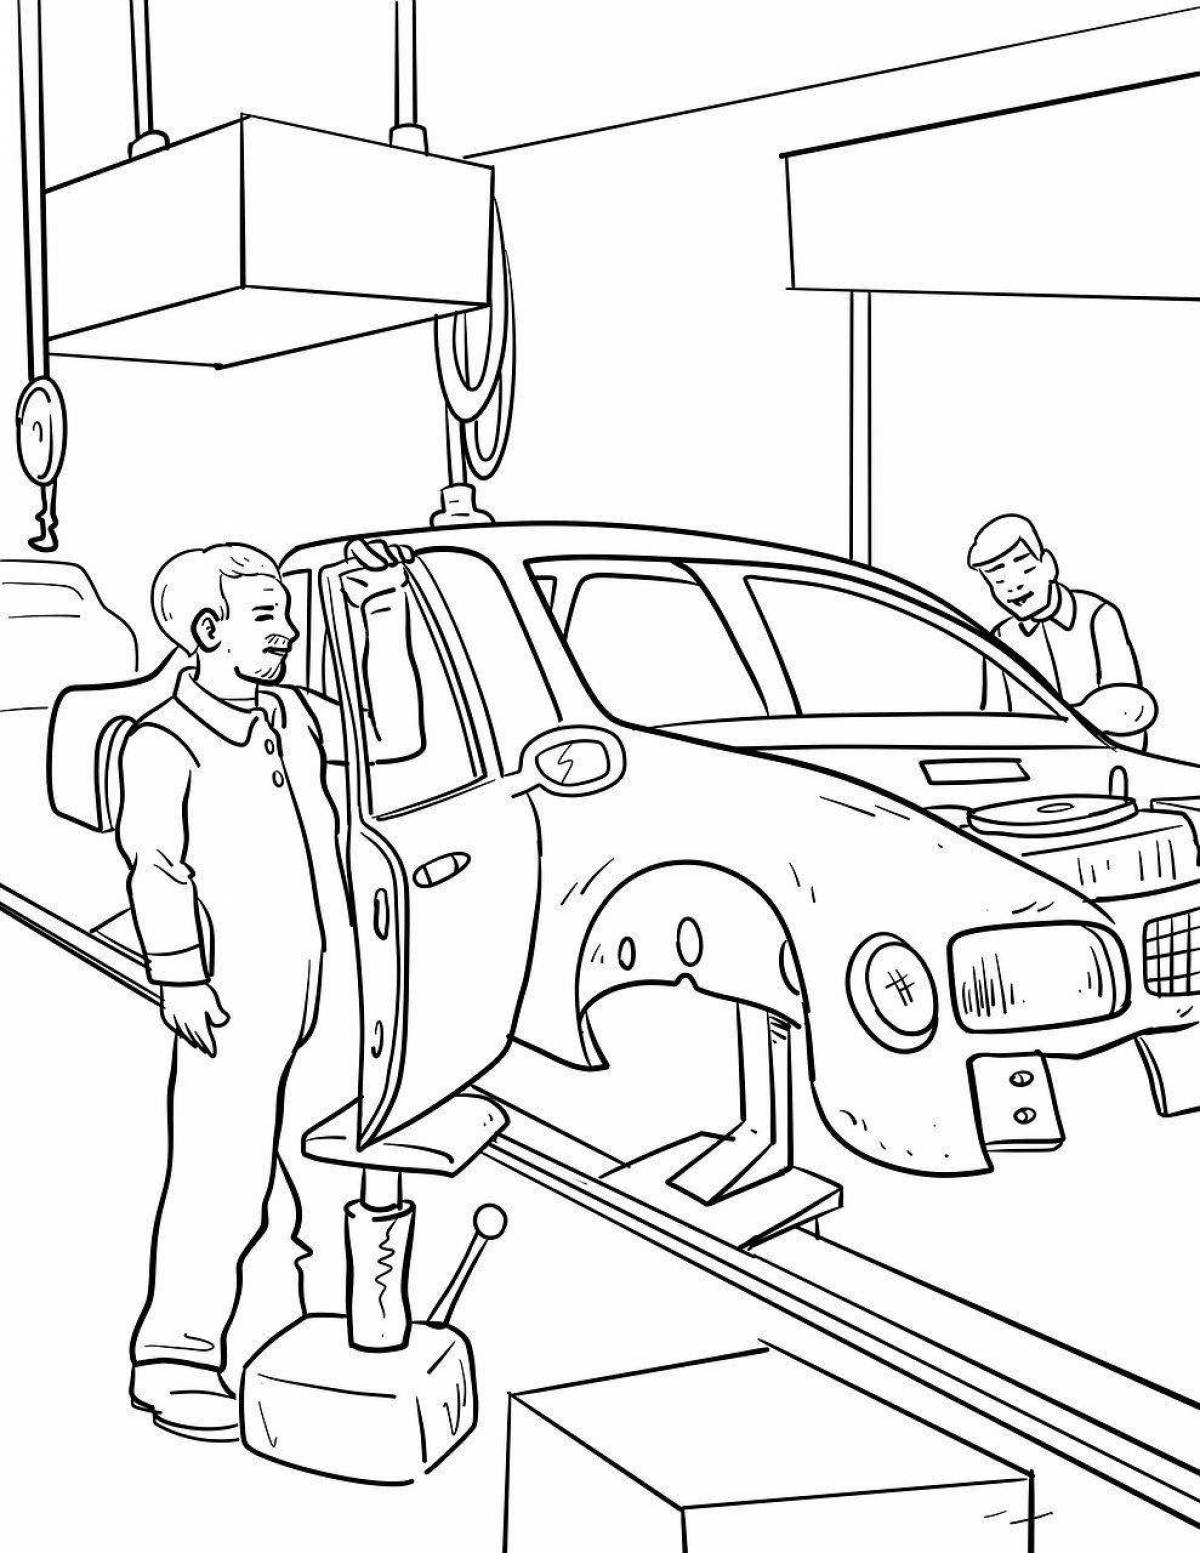 Fun coloring of the auto mechanic profession